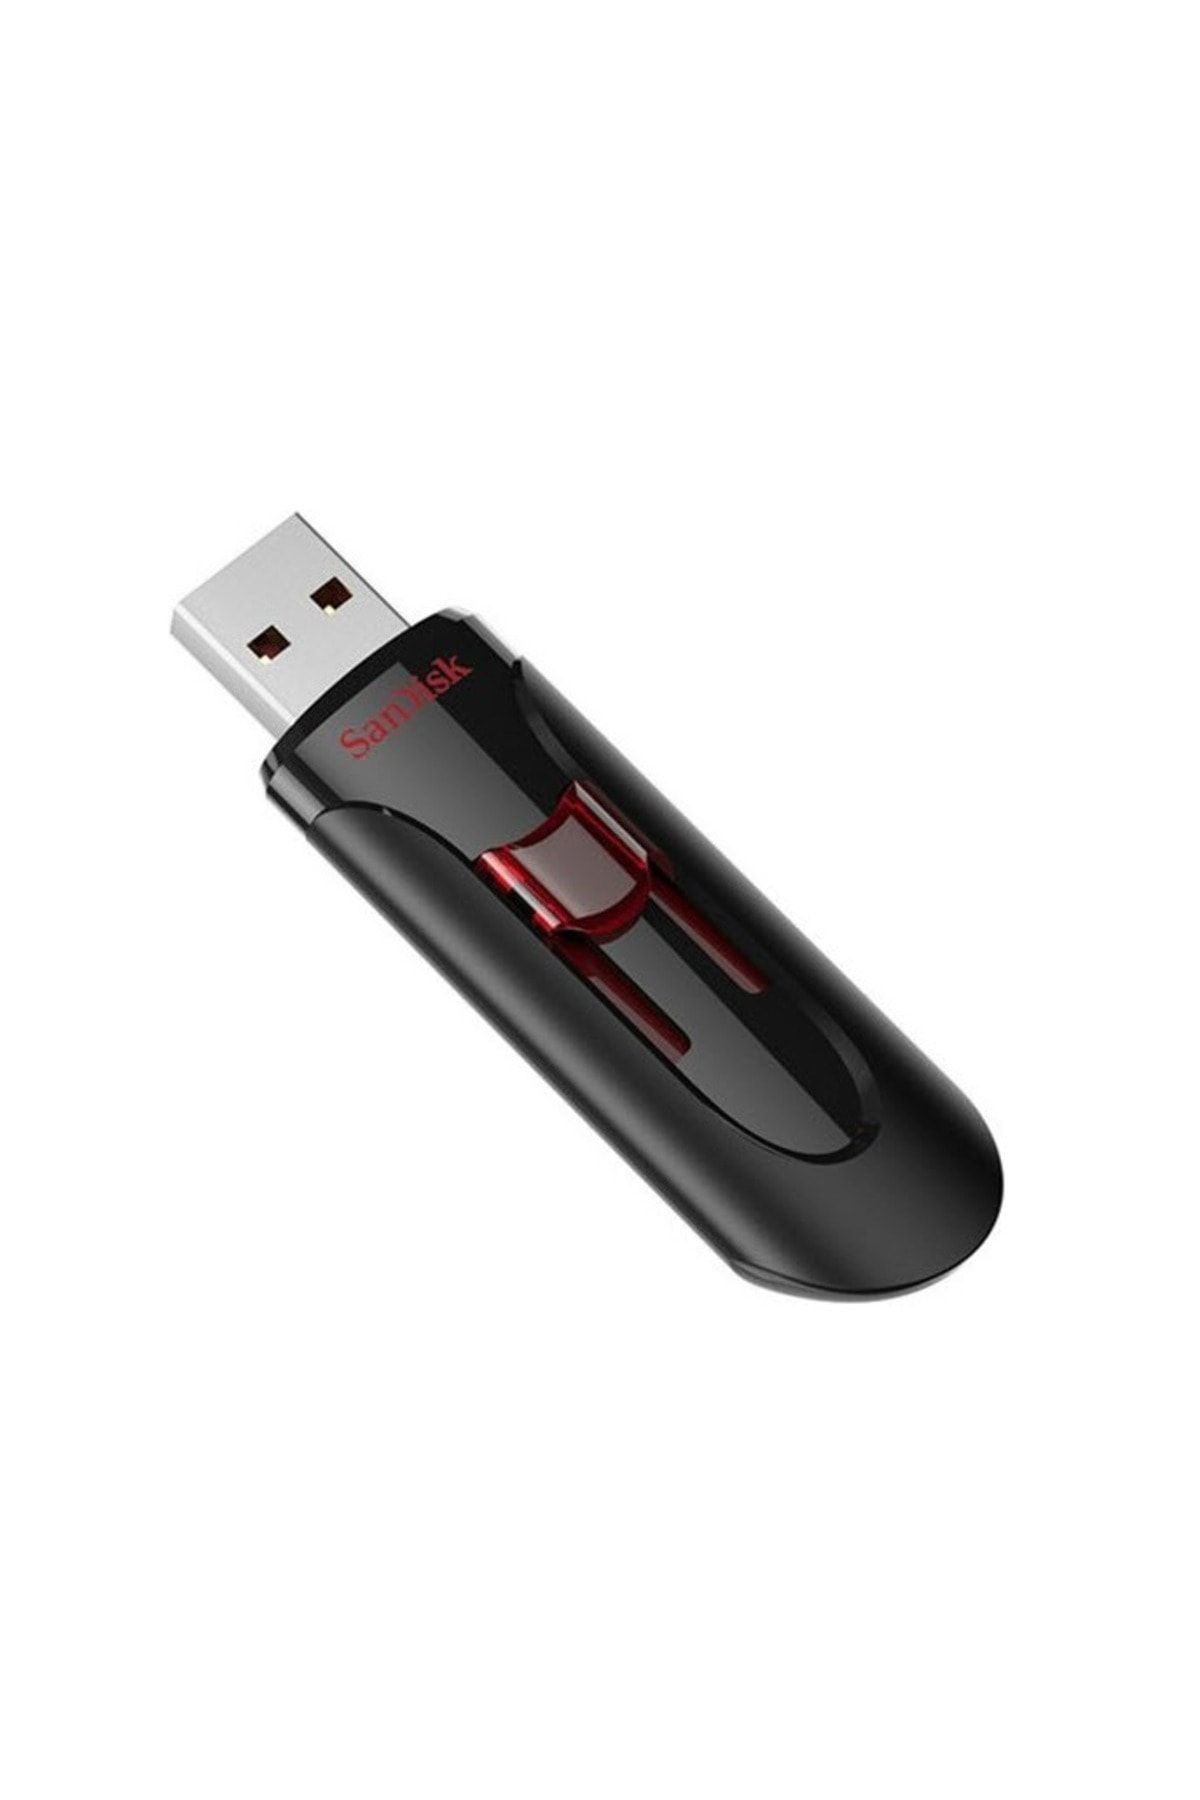 Sandisk Ufm Cruzer Glide USB 3.0 Bellek 256 GB SDCZ600-256G-G35